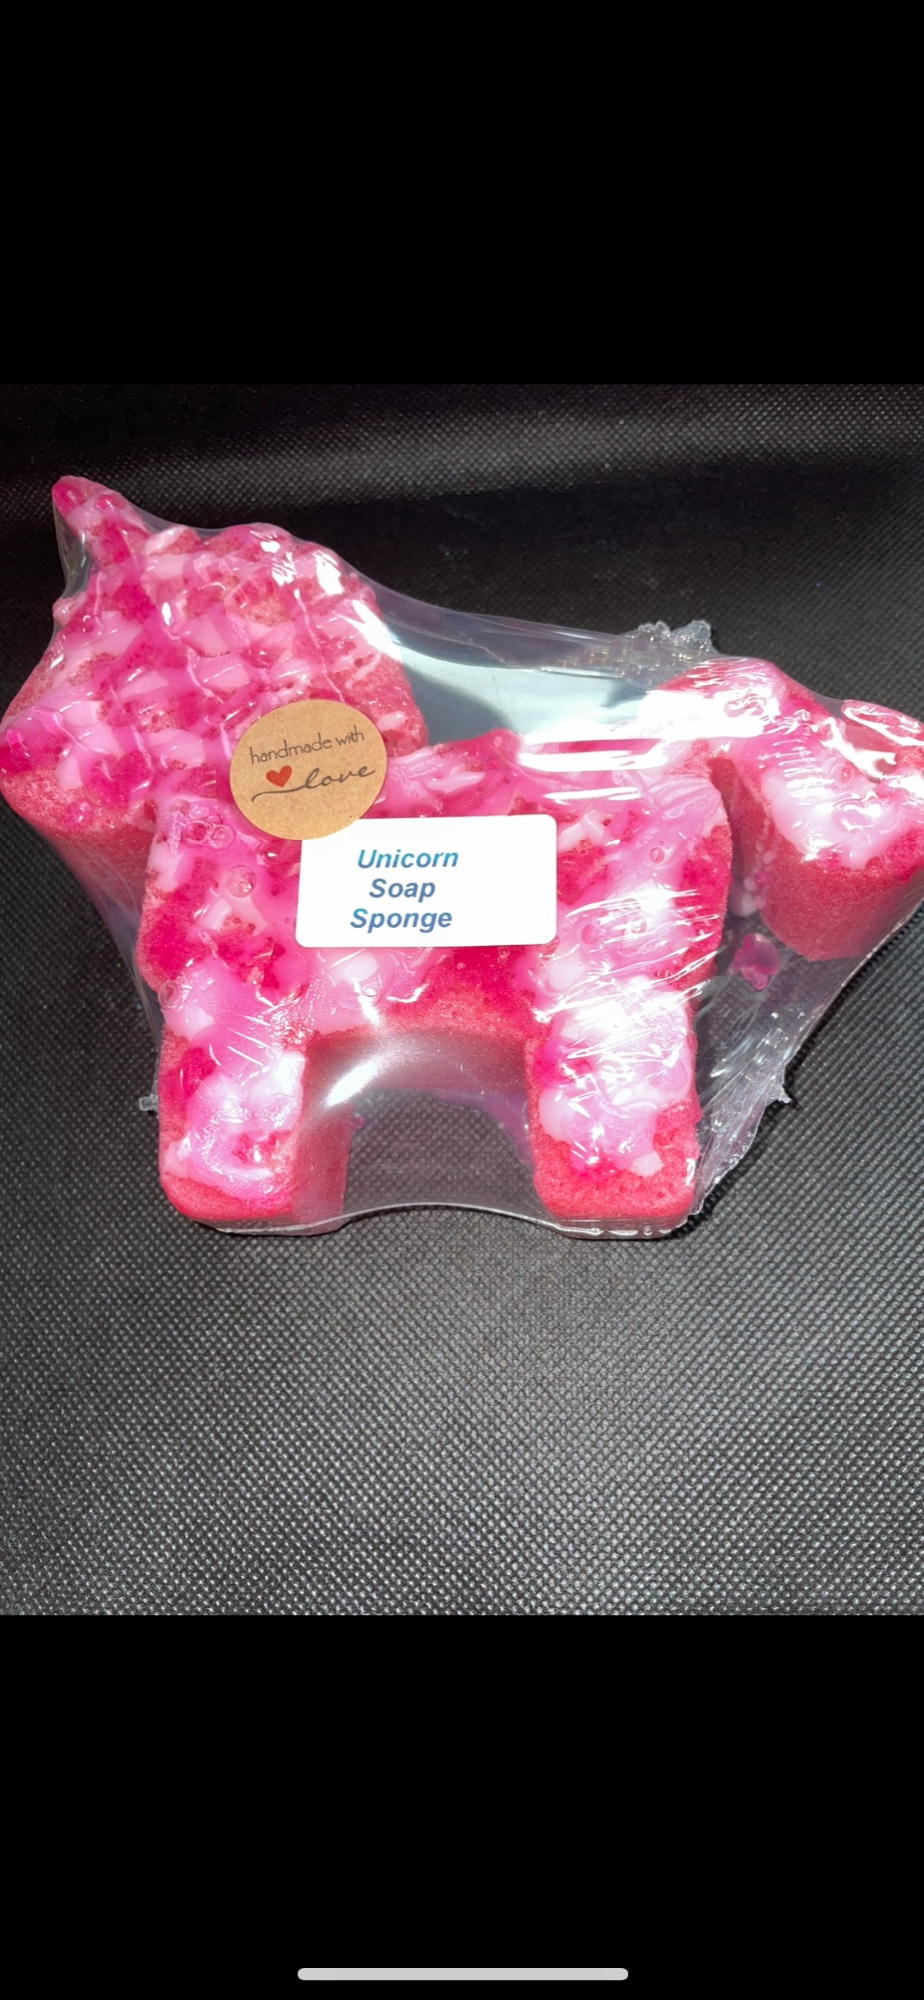 Cherry fragrance Unicorn Shaped Soap Sponge - handmade .. made to order